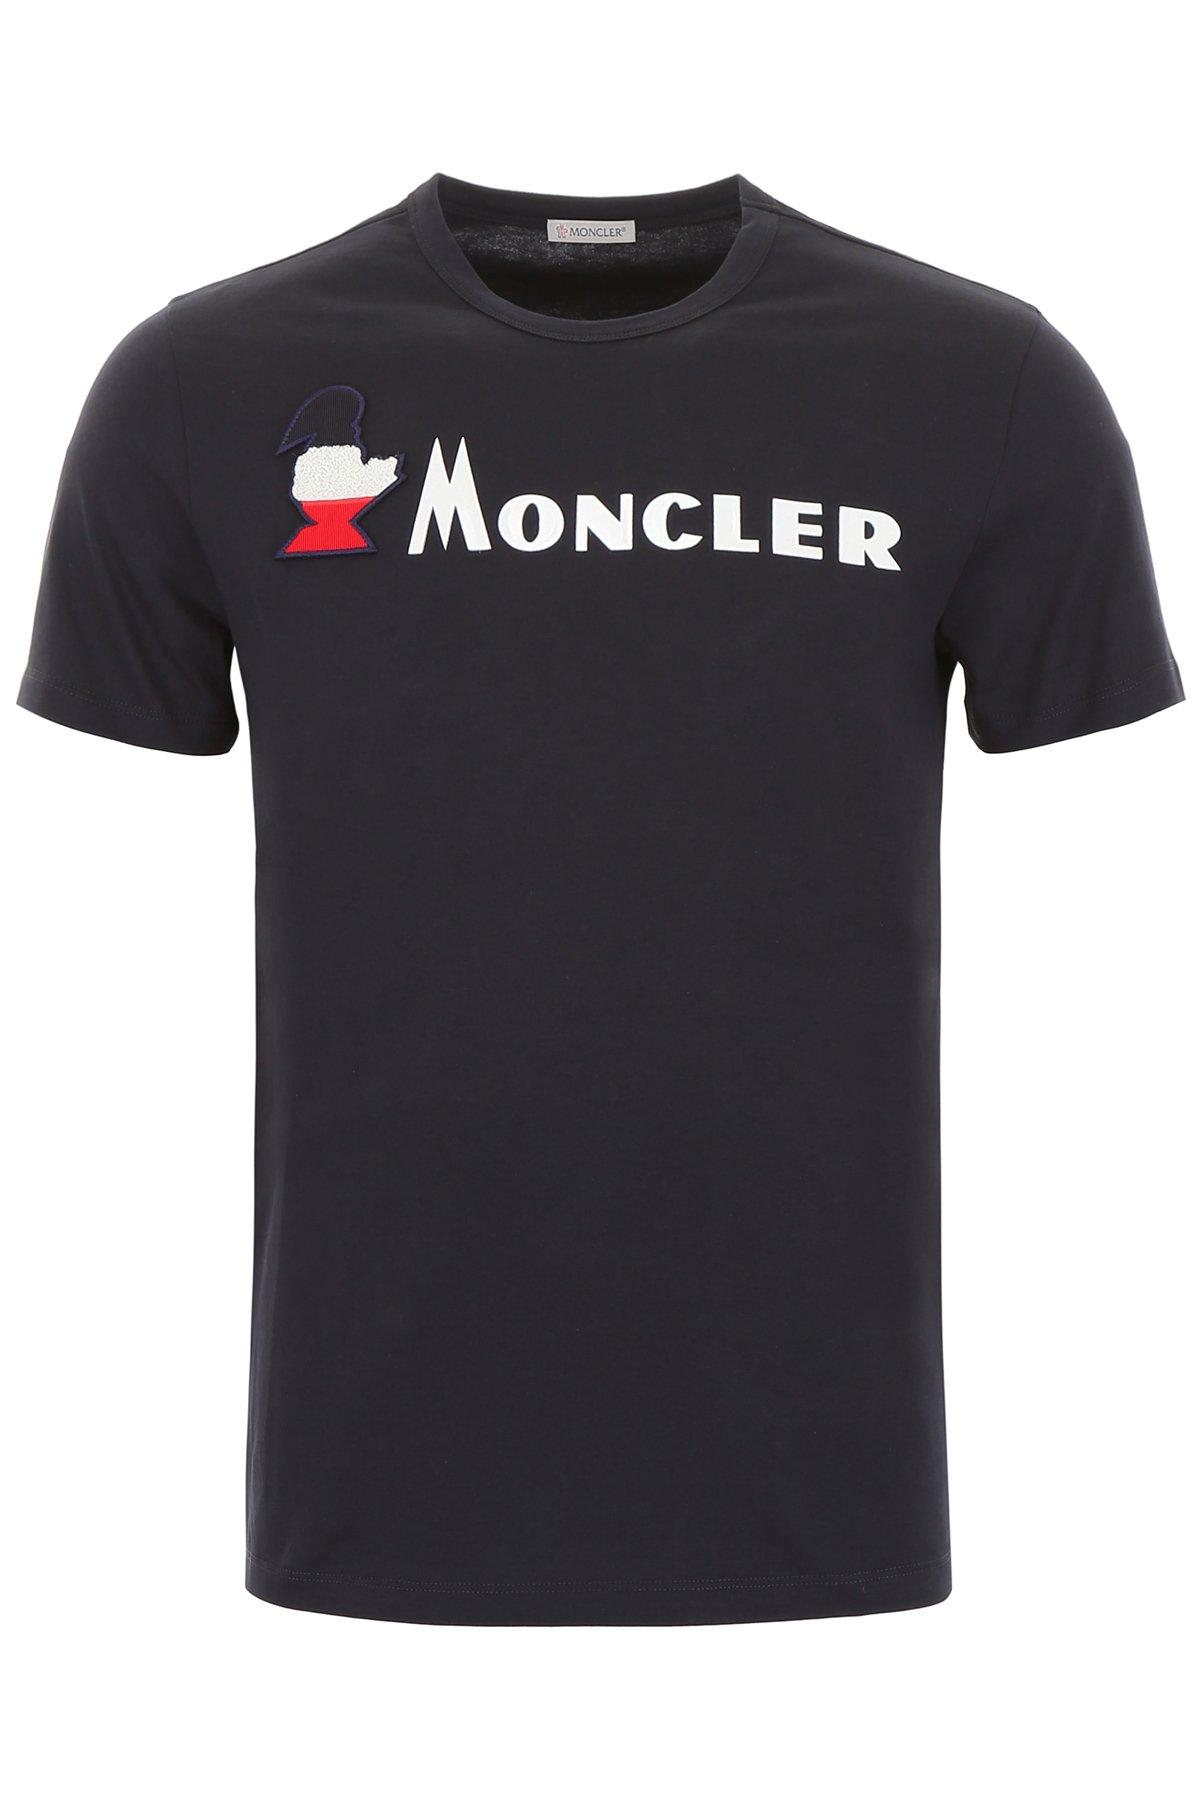 Moncler Cotton Navy Logo T-shirt in 